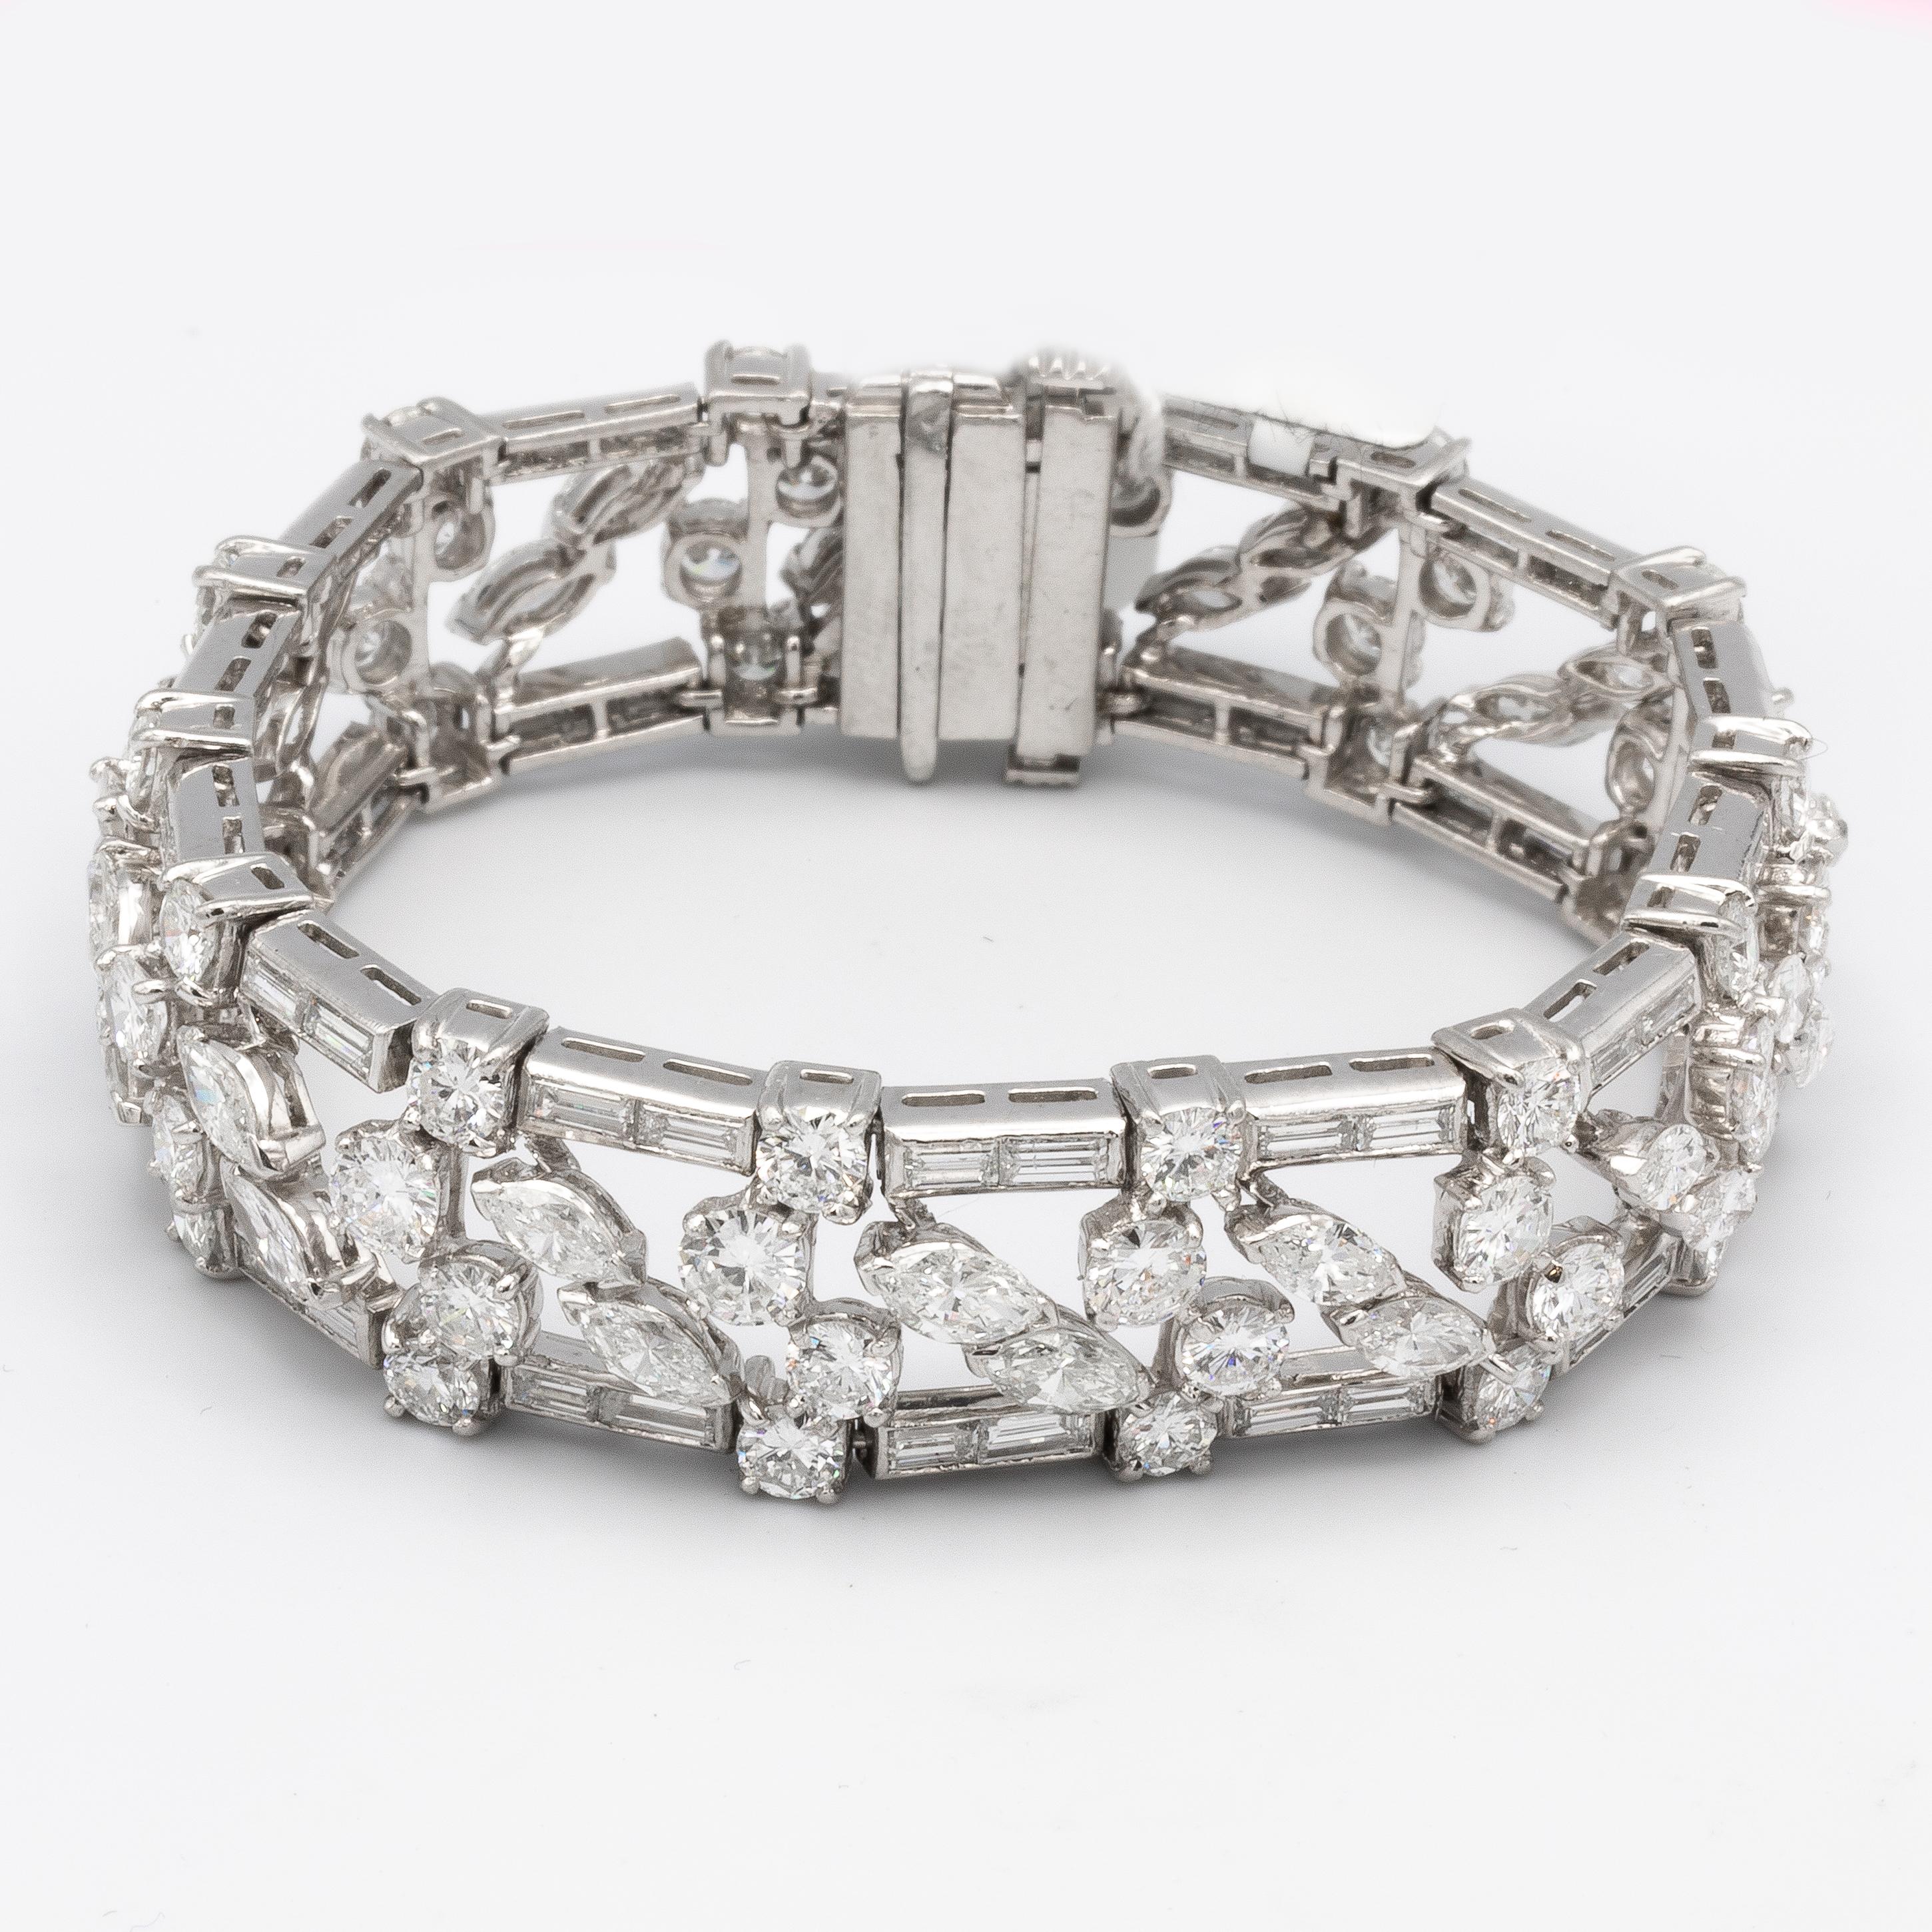 Art Deco Elegant Handmade Platinum Bracelet With 24.7 Carats Of Diamonds 